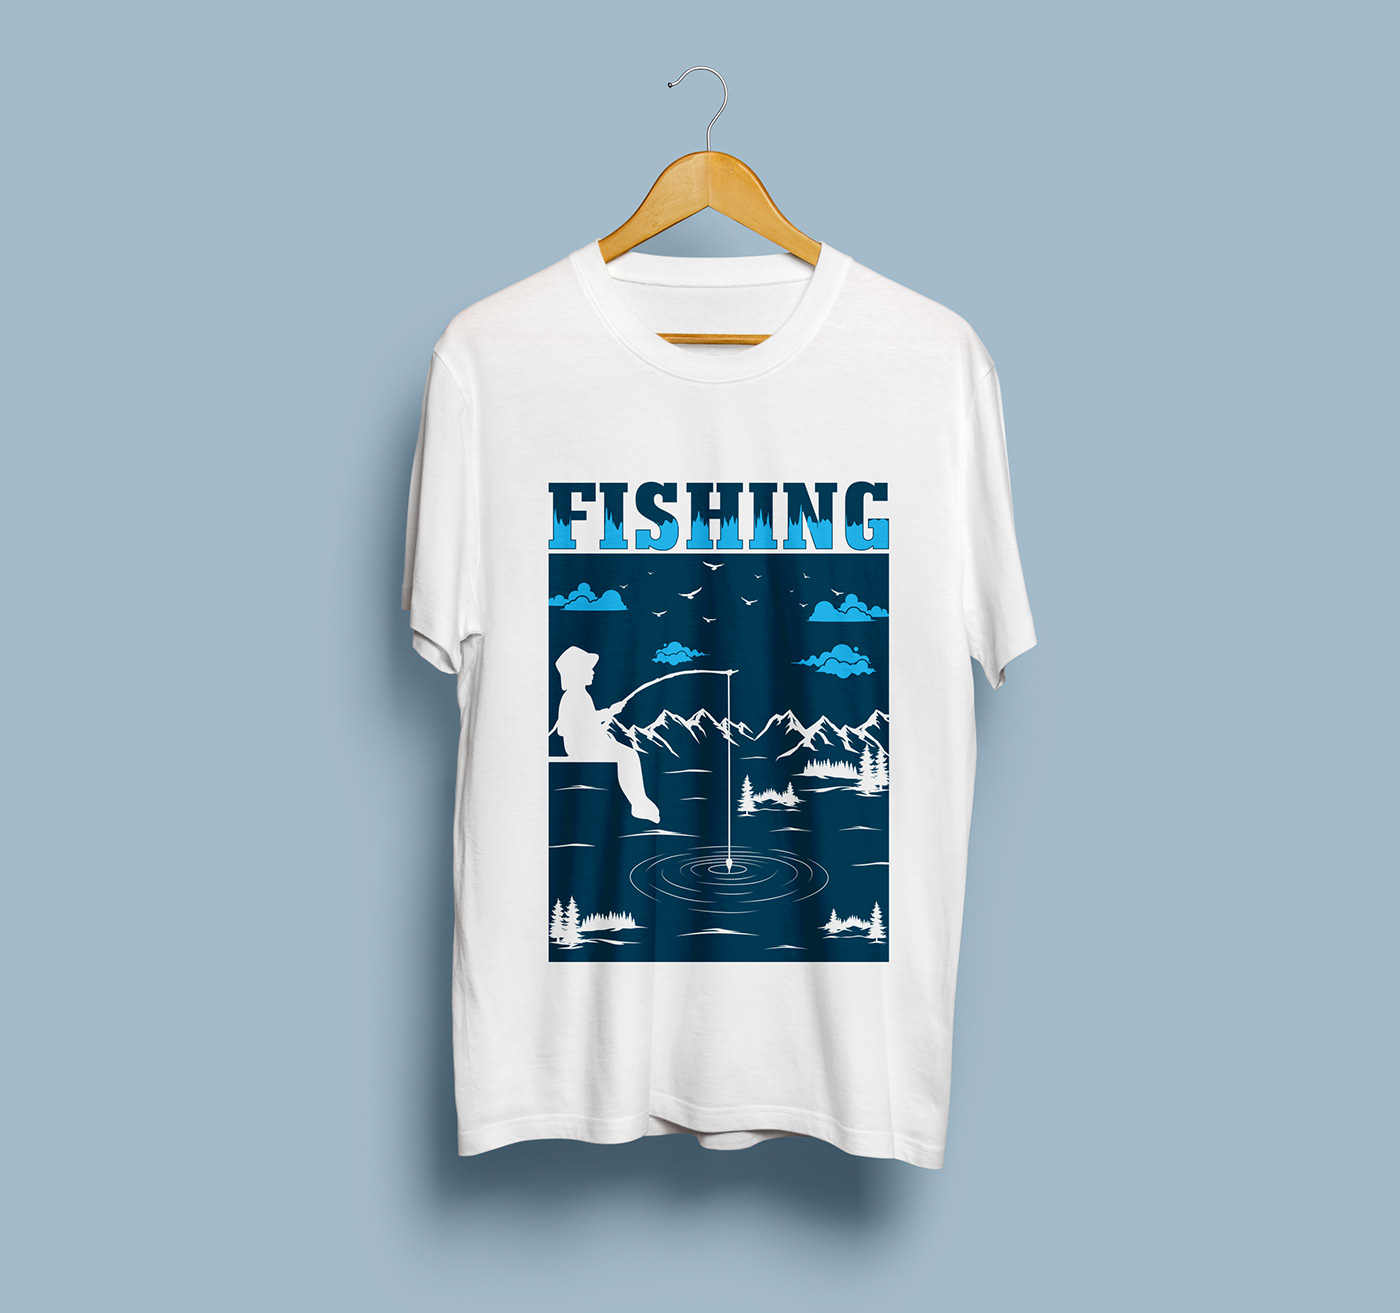 fishing t-shirt design T-Shirt Design boys t-shirt Best T-shirt Design UNIQUE T-SHIRT DESIGN Catching Fish T-shirt FISHING LOVER T-SHIRT fishing t-shirt Hunting Fish t-shirt